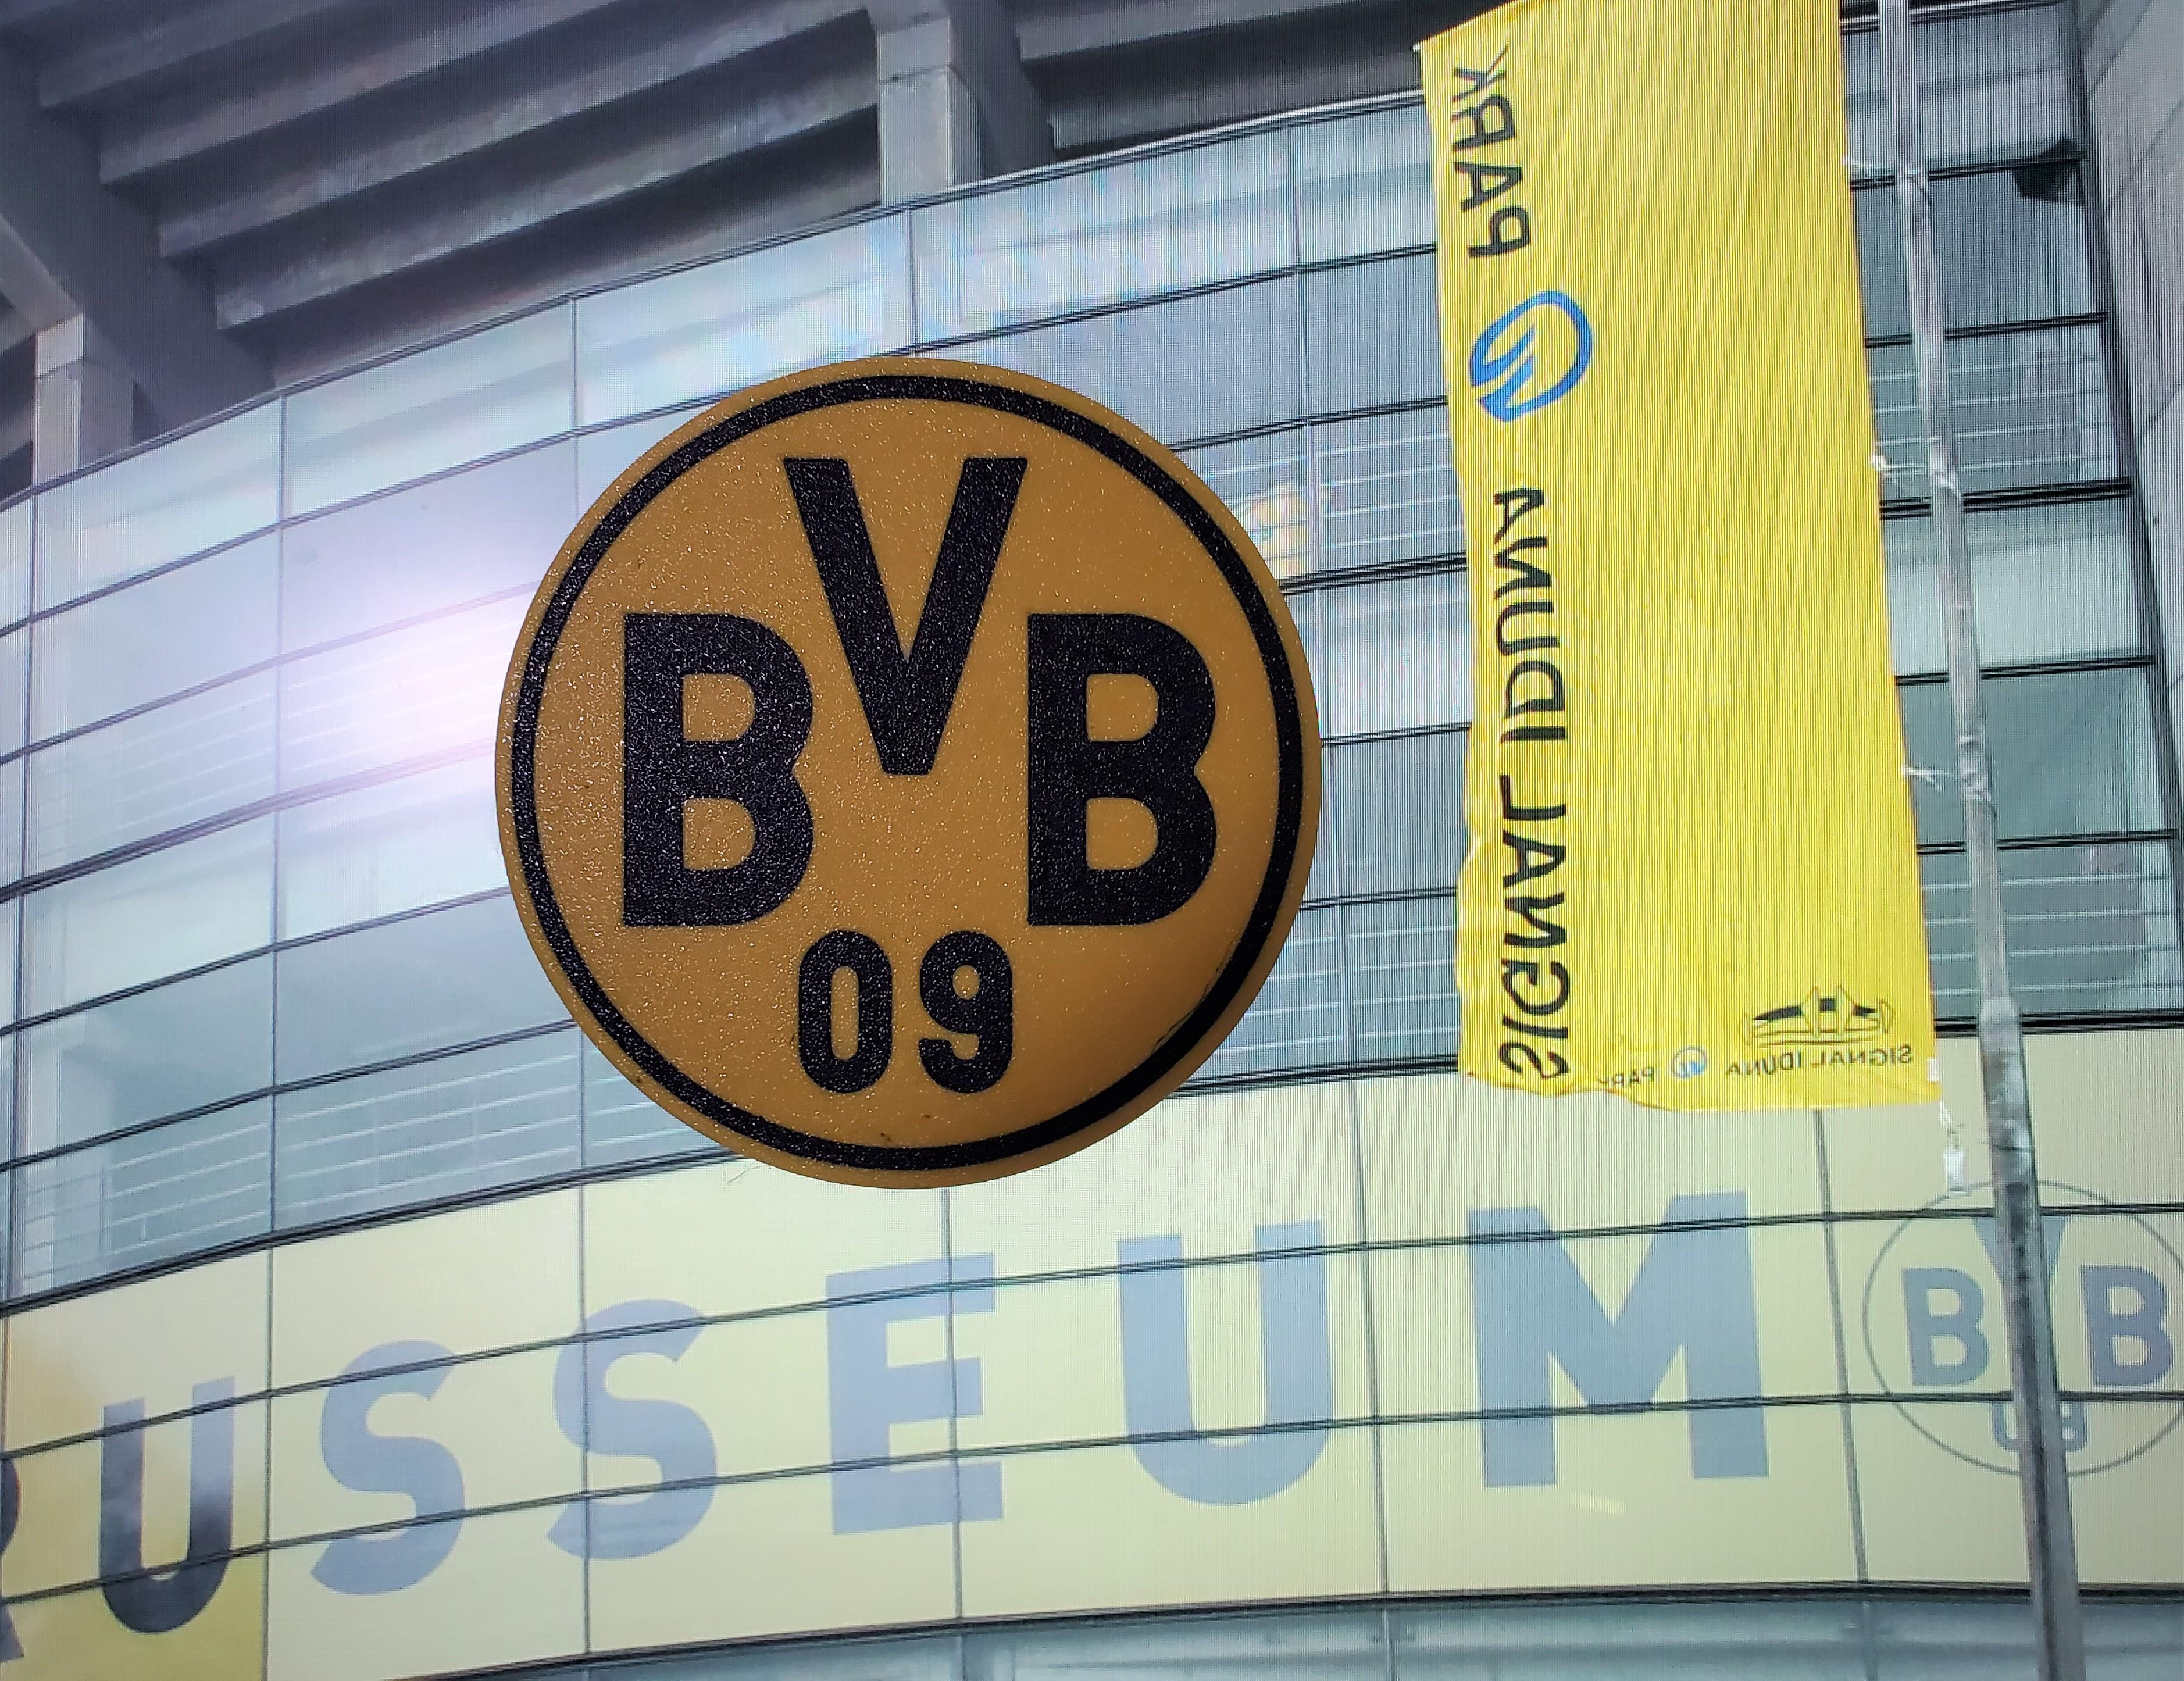 AMS / MMU Ballspielverein Borussia 09 e. V. Dortmund (BVB) coaster or Plaque 3d model